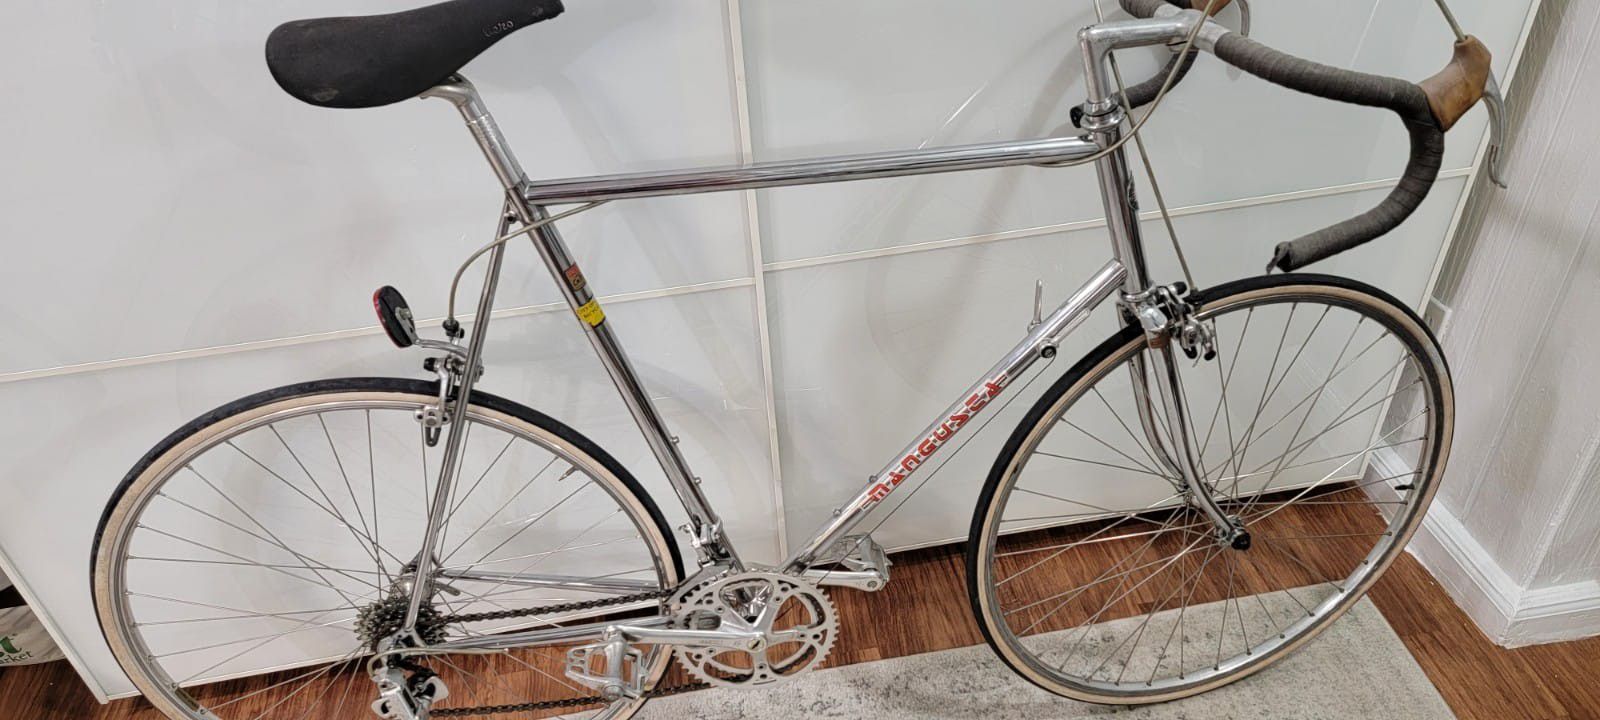 Mangusta 980 63cm Road Bicycle......